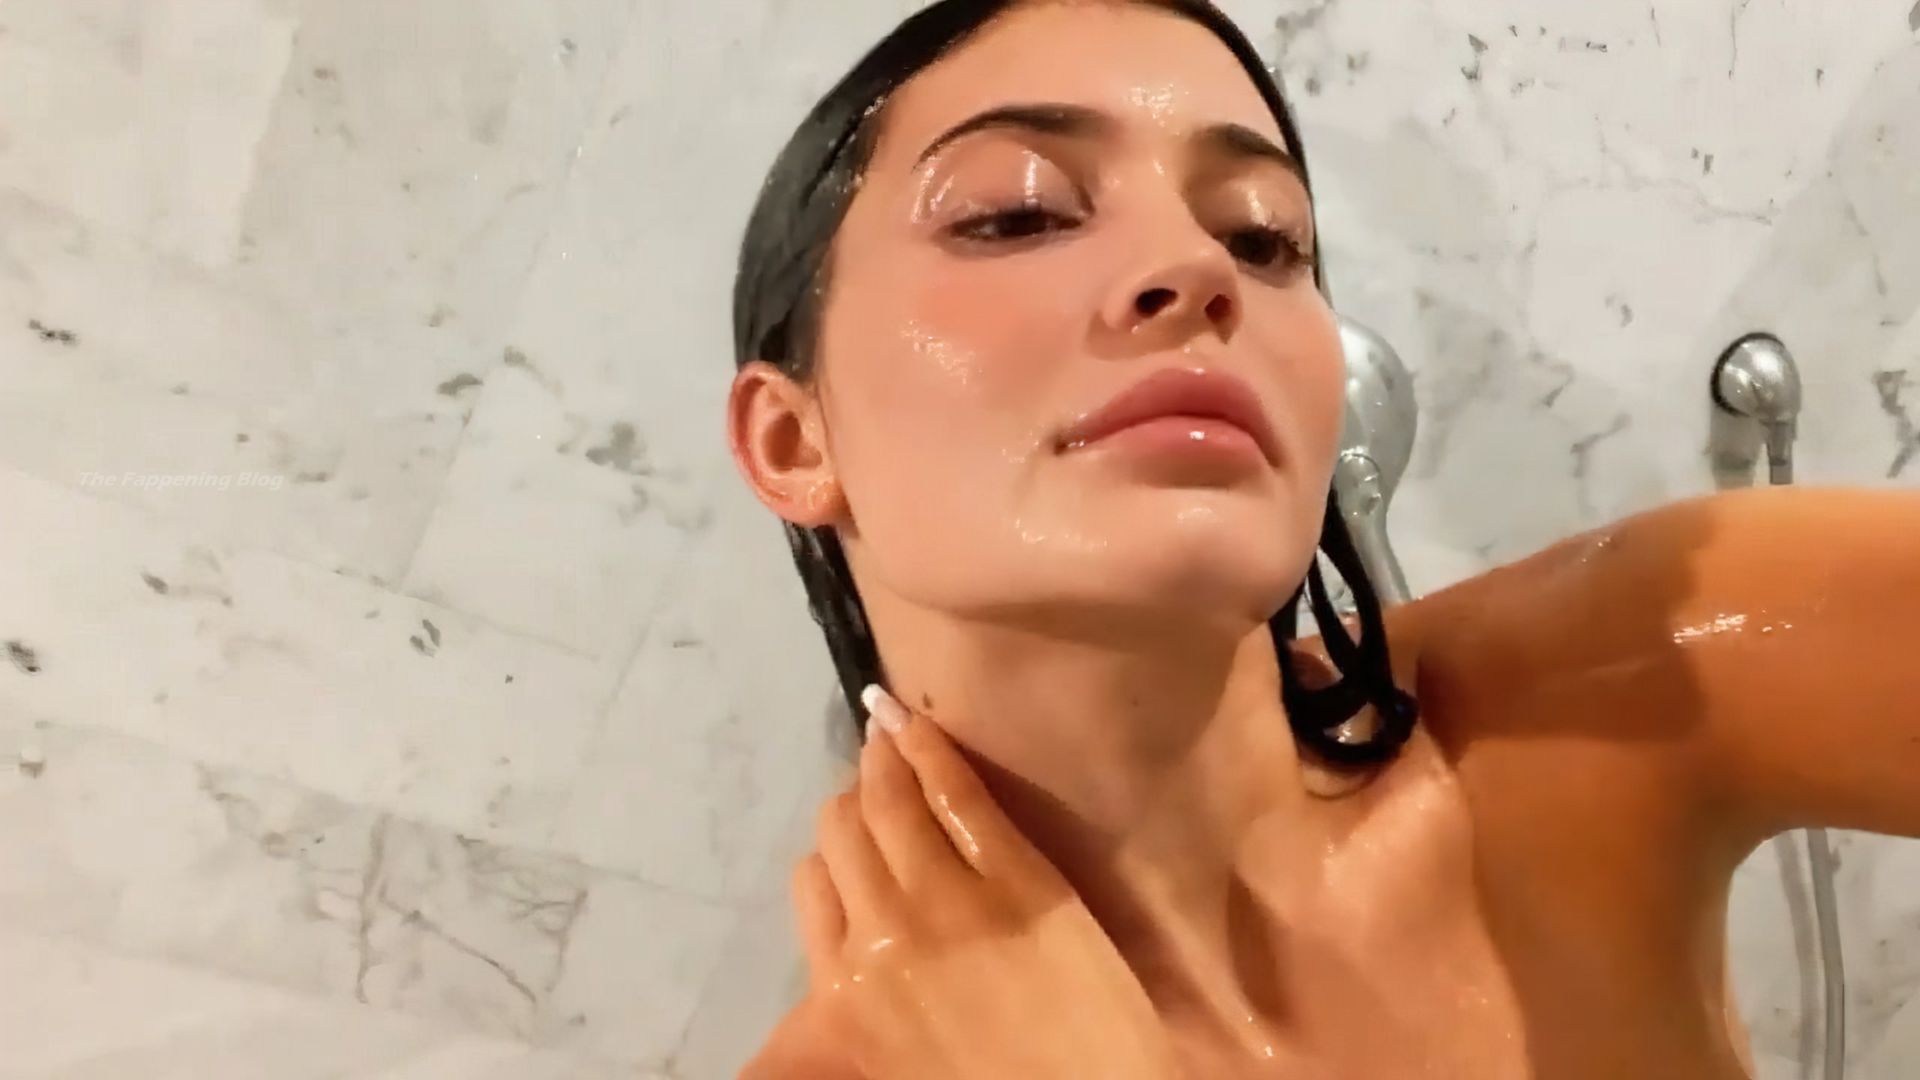 Kylie-Jenner-in-Shower-thefappeningblog.com-219-.jpg